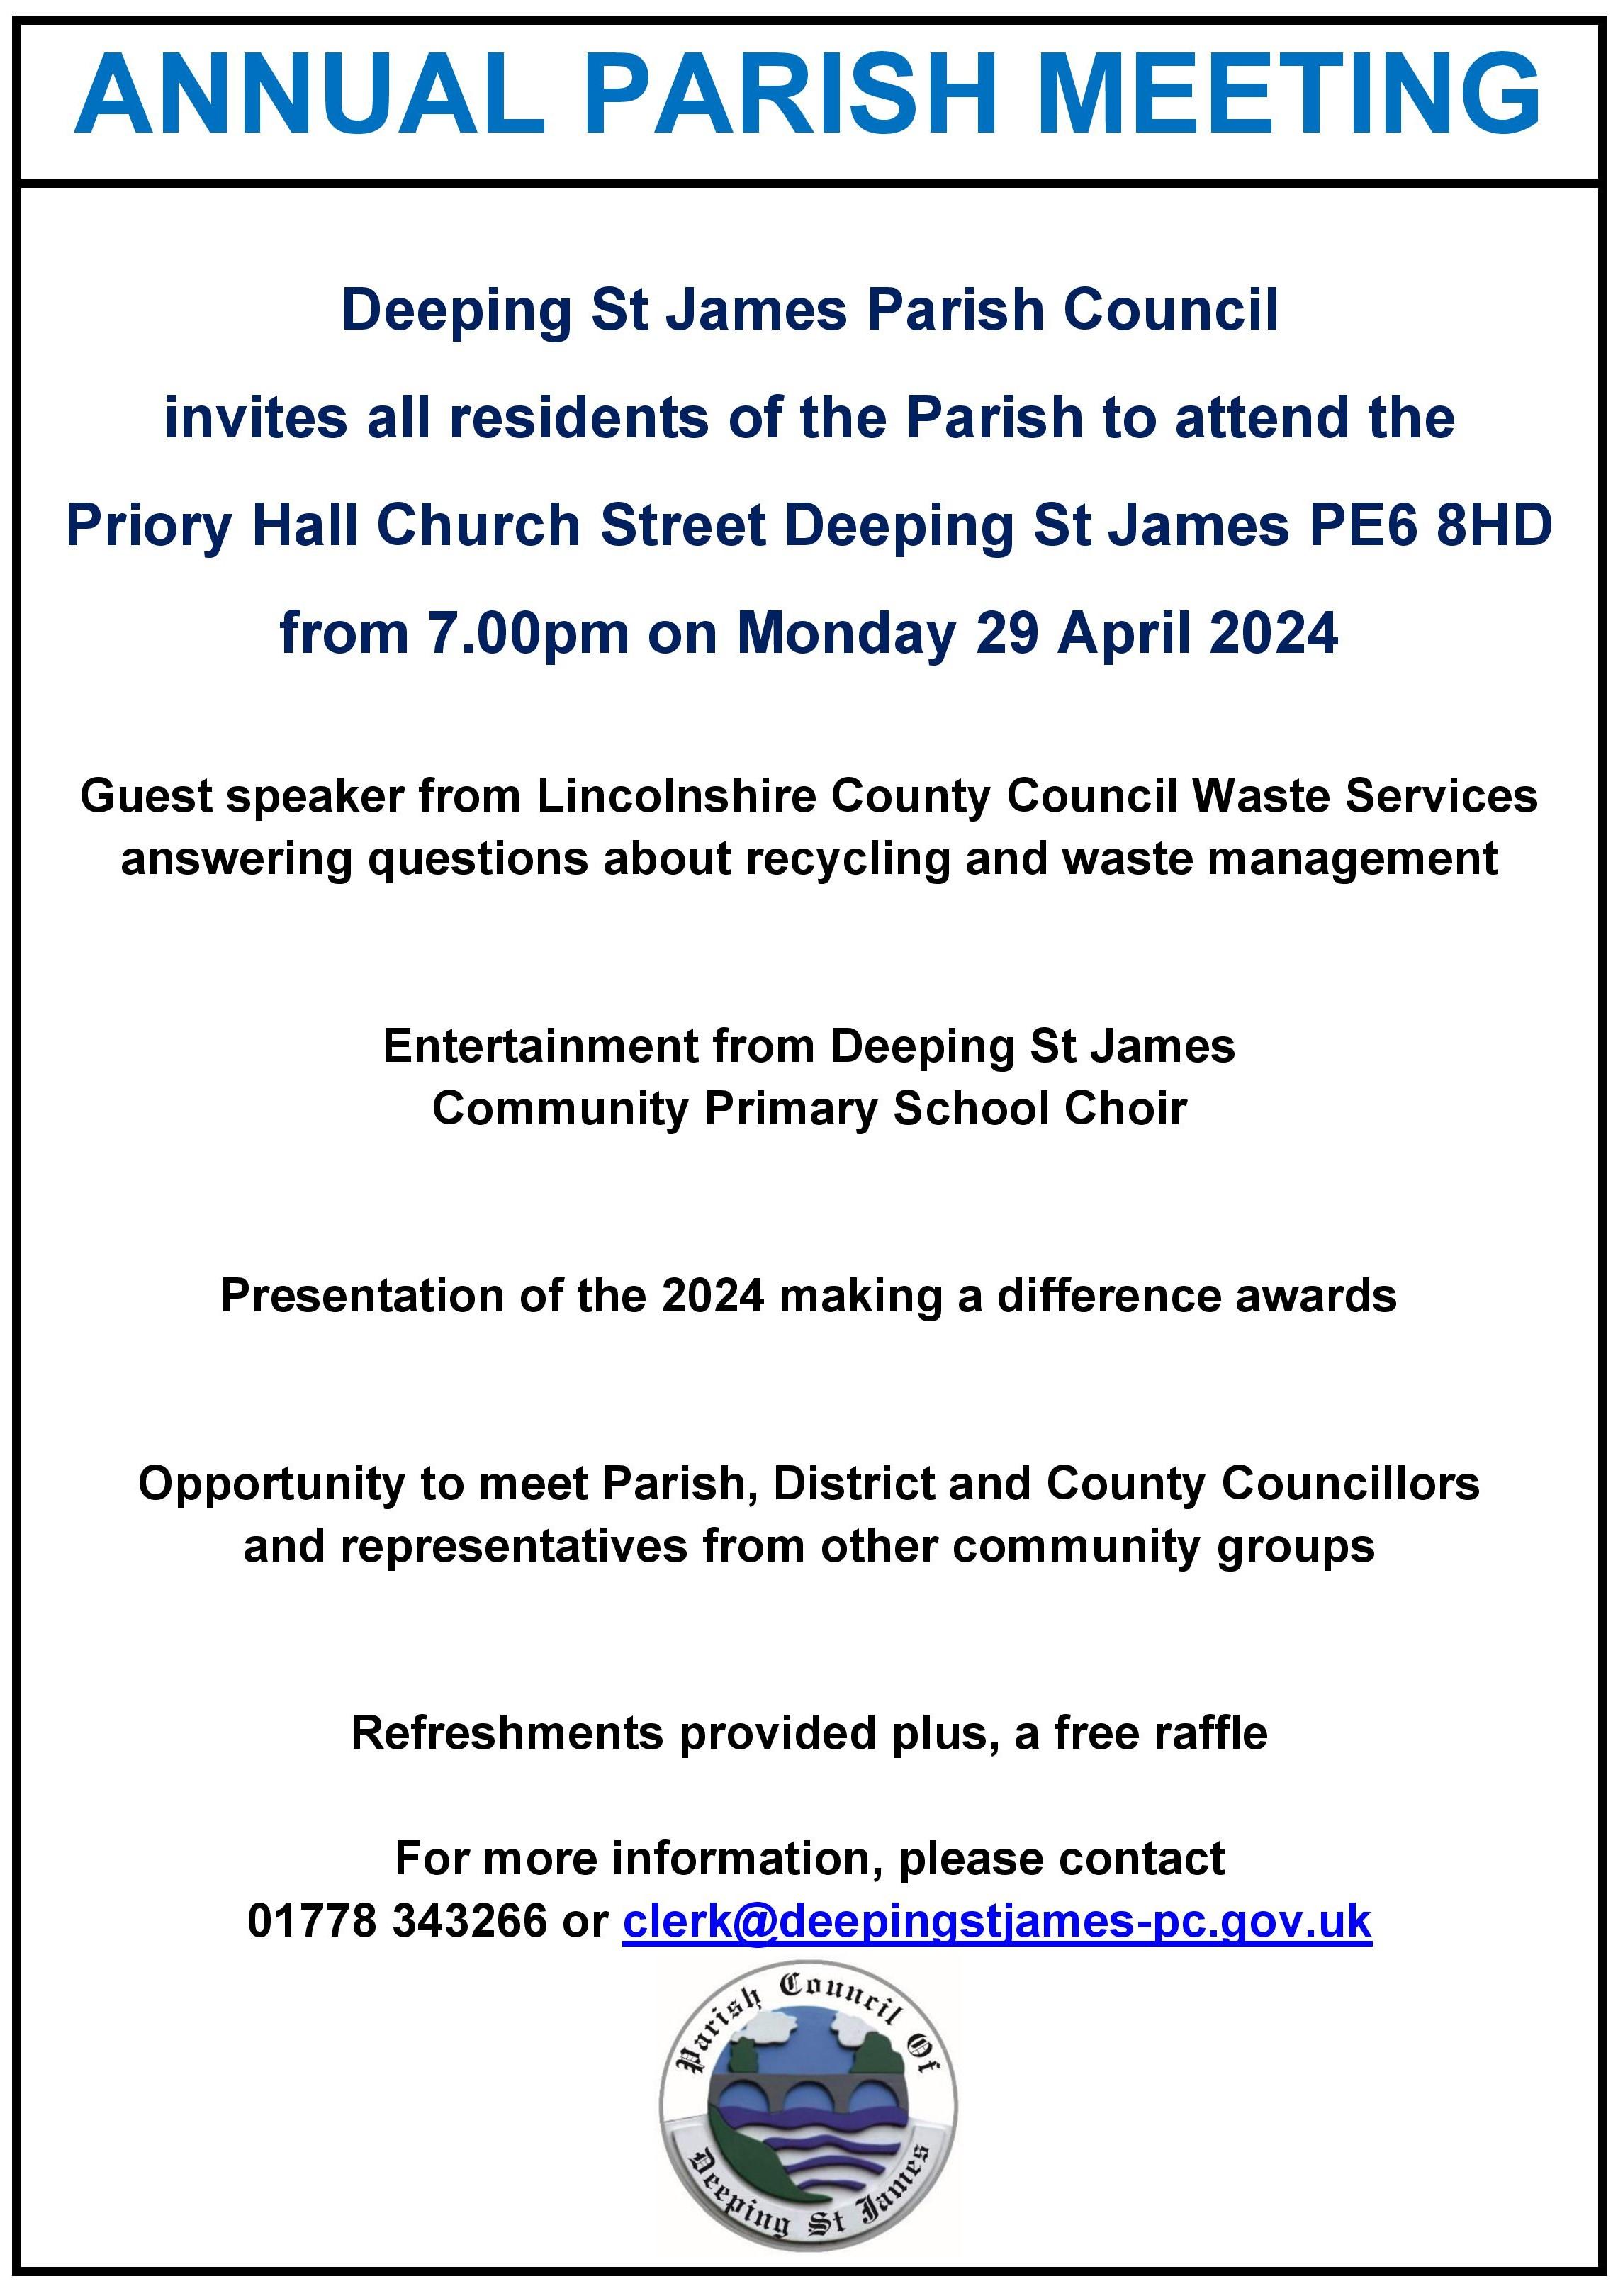 Annual parish meeting 2024 poster